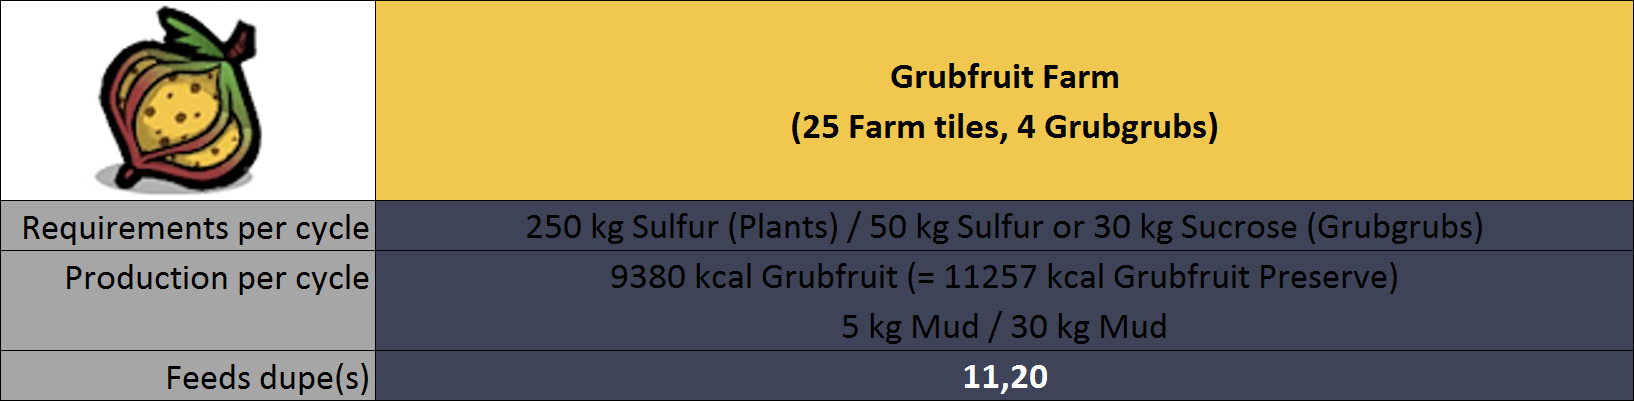 GrubfruitFarm.jpg